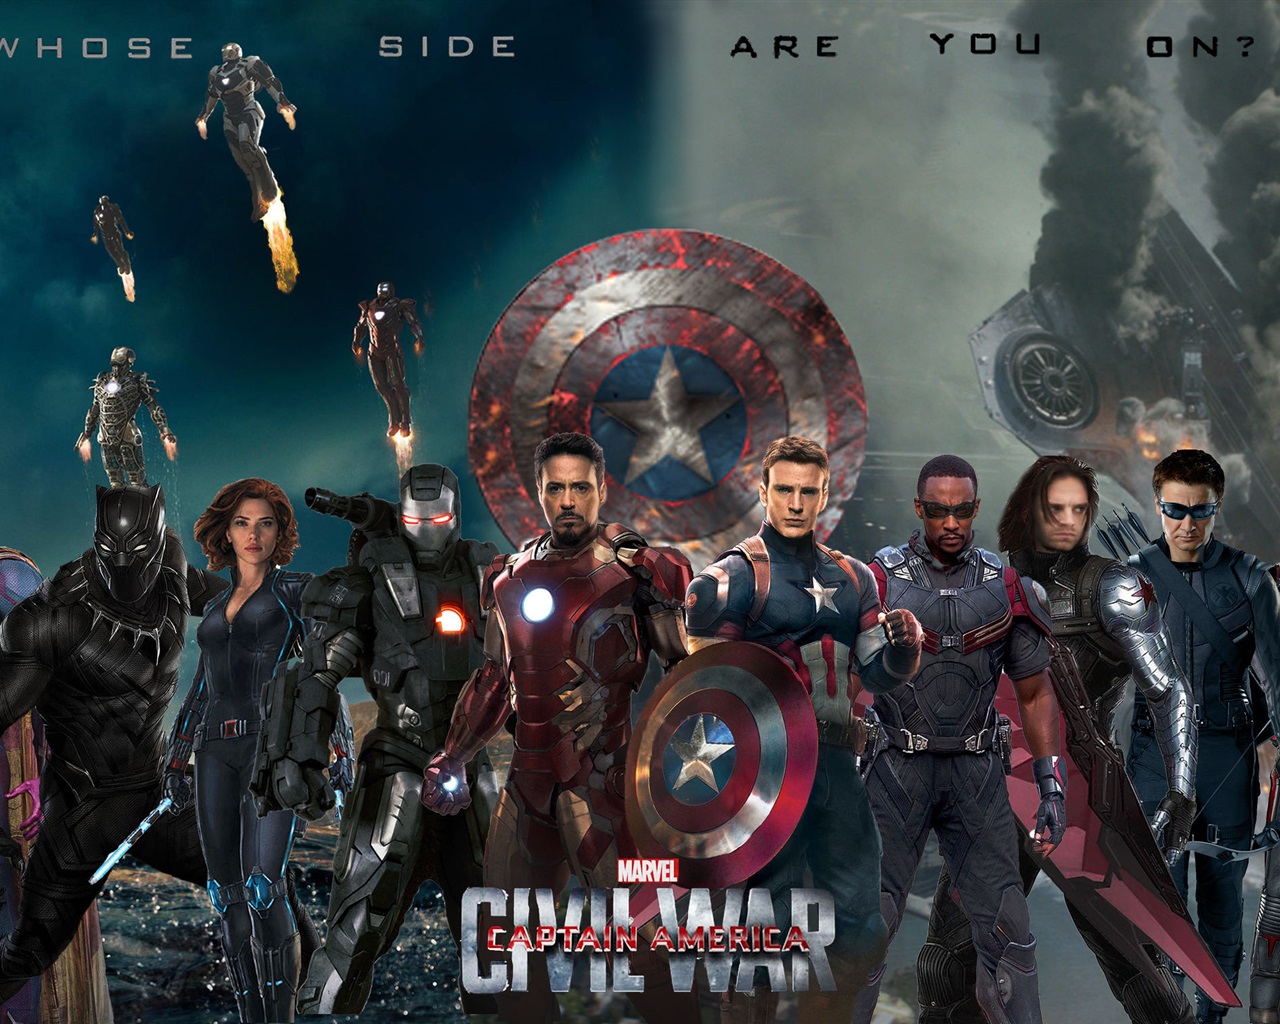 marvel civil war wallpaper,action adventure game,movie,superhero,fictional character,captain america